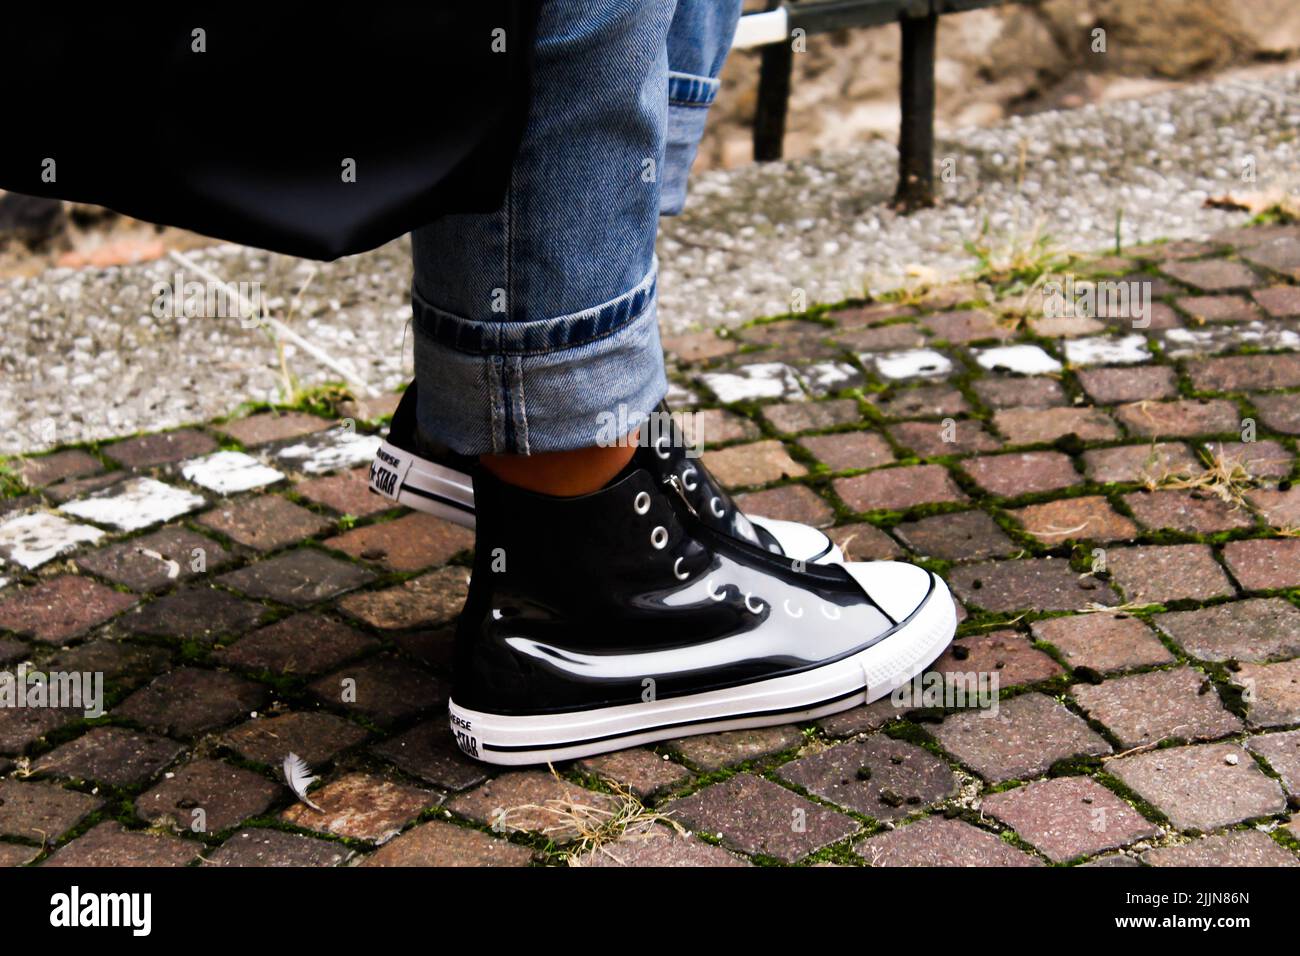 Black converse shoe -Fotos und -Bildmaterial in hoher Auflösung – Alamy